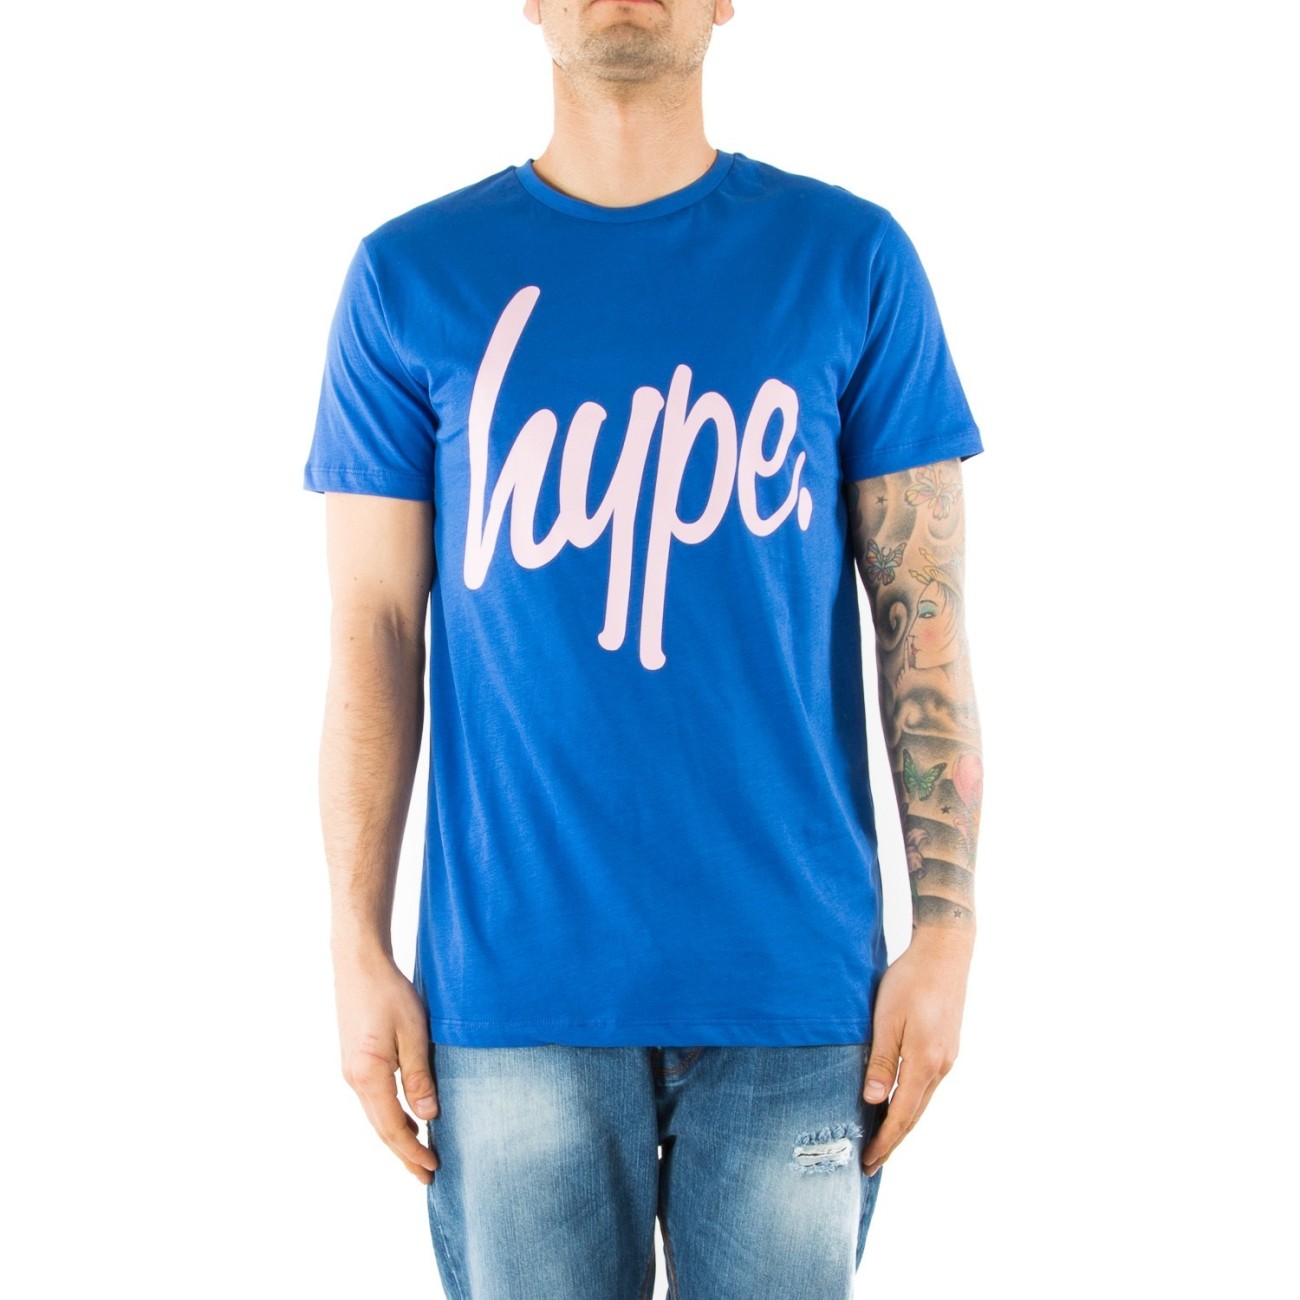 Hype blue crewneck t-shirt...